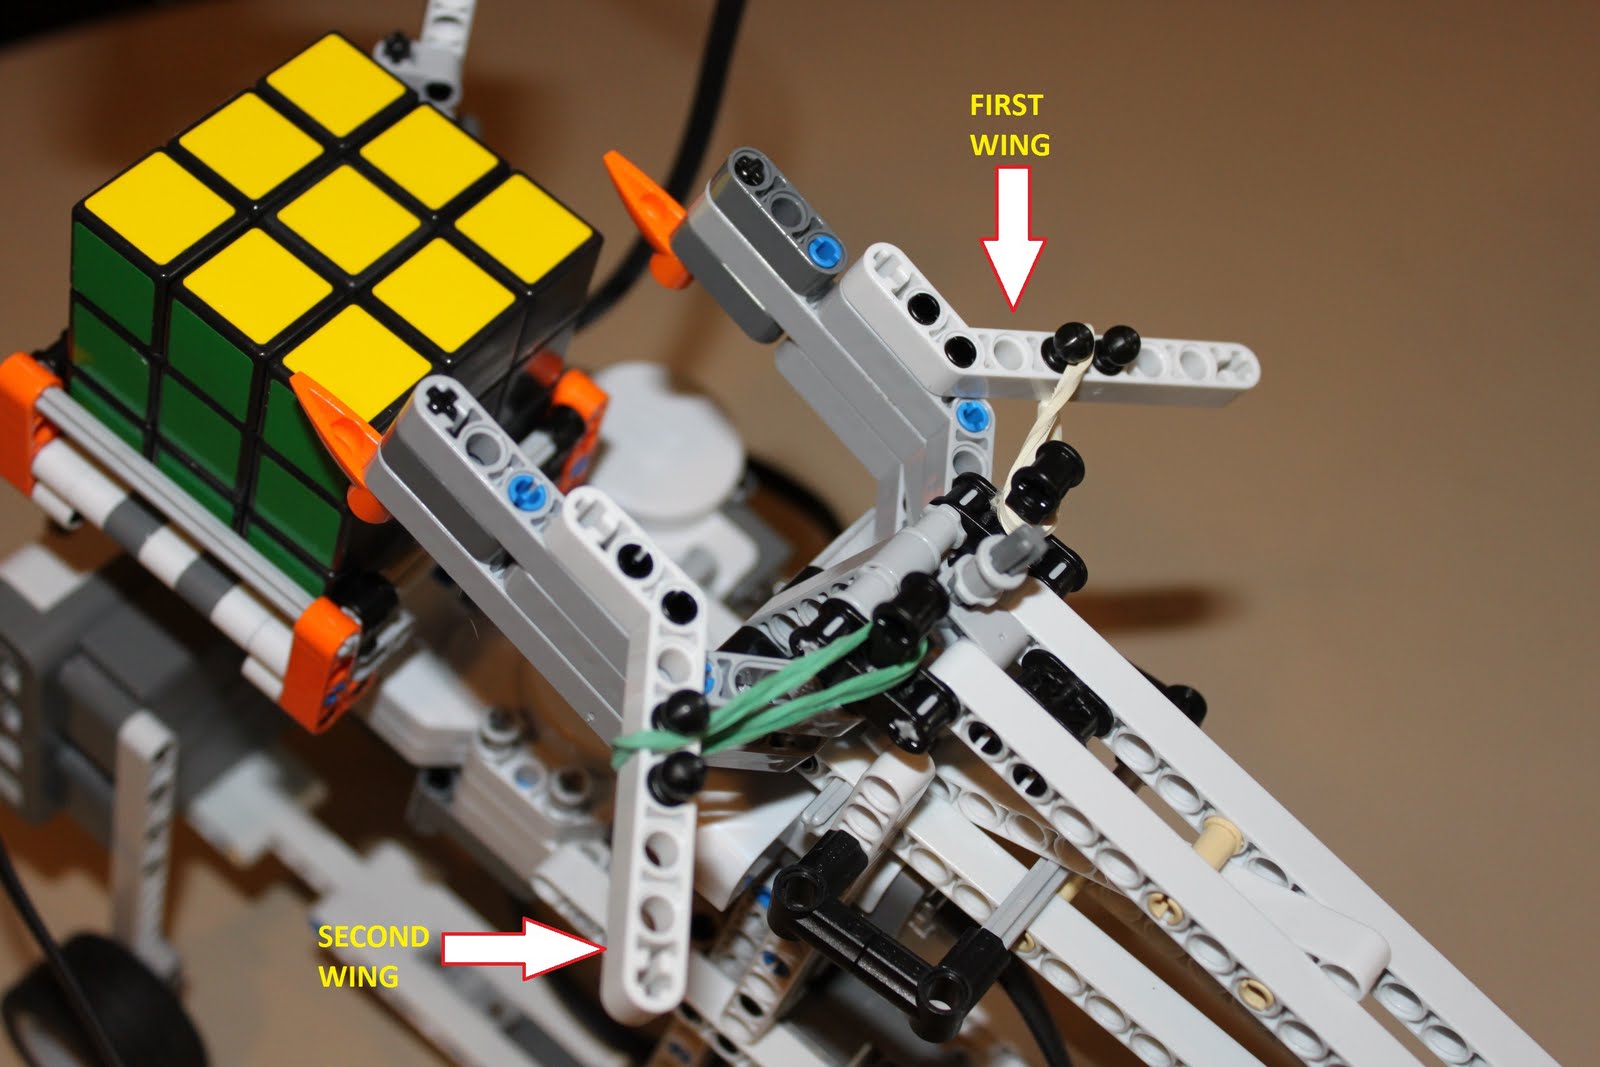 How To Program The Lego Mindstorms Mindcuber